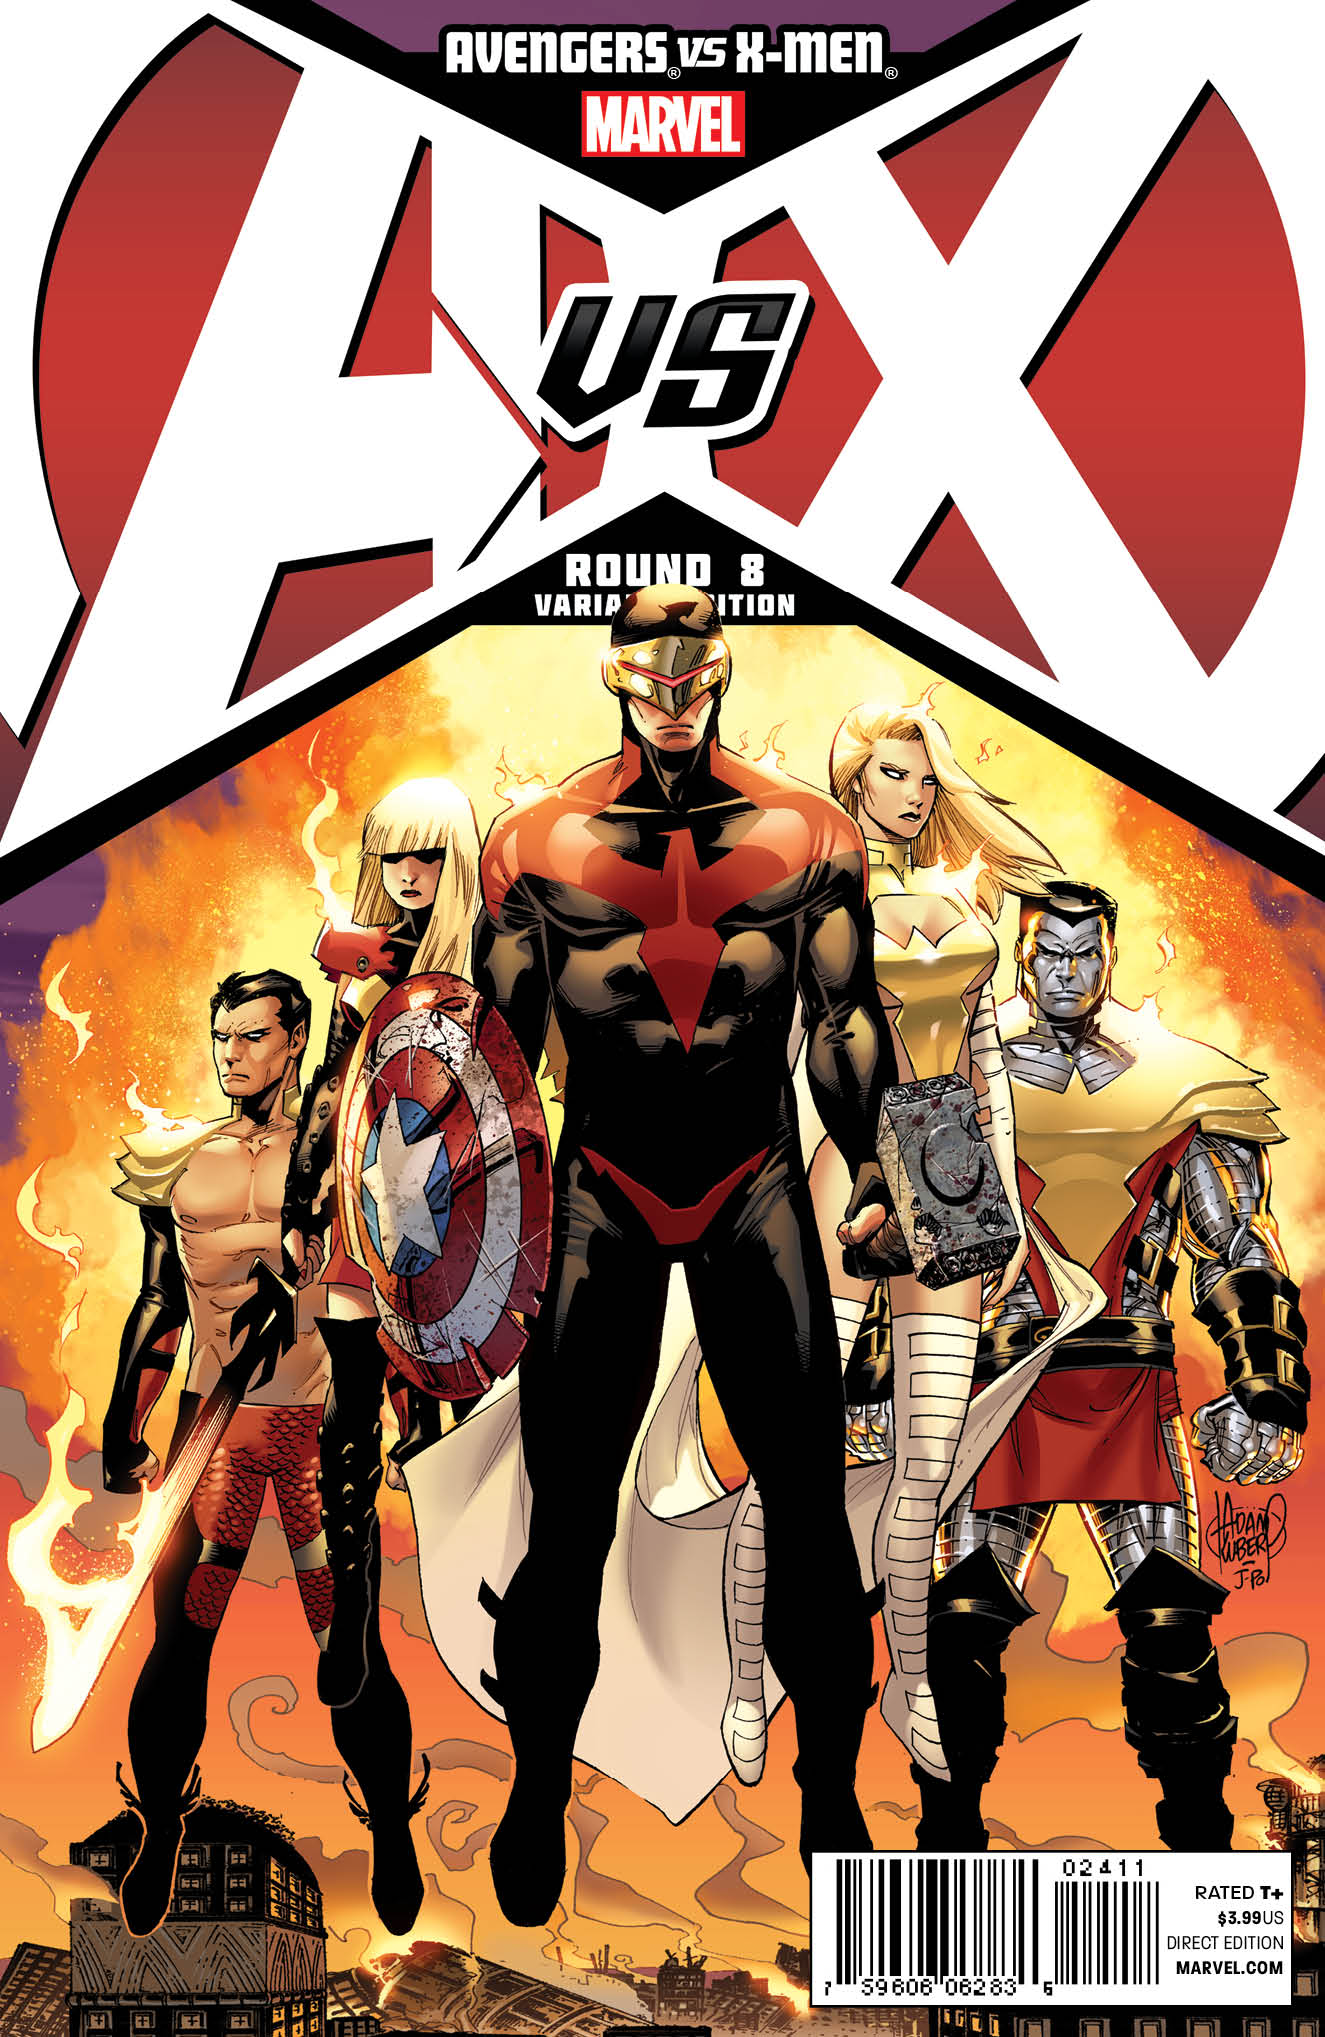 Preview de Avengers Vs X-Men #8 - Vingadores - Marvel Comics - Blog Farofeiros